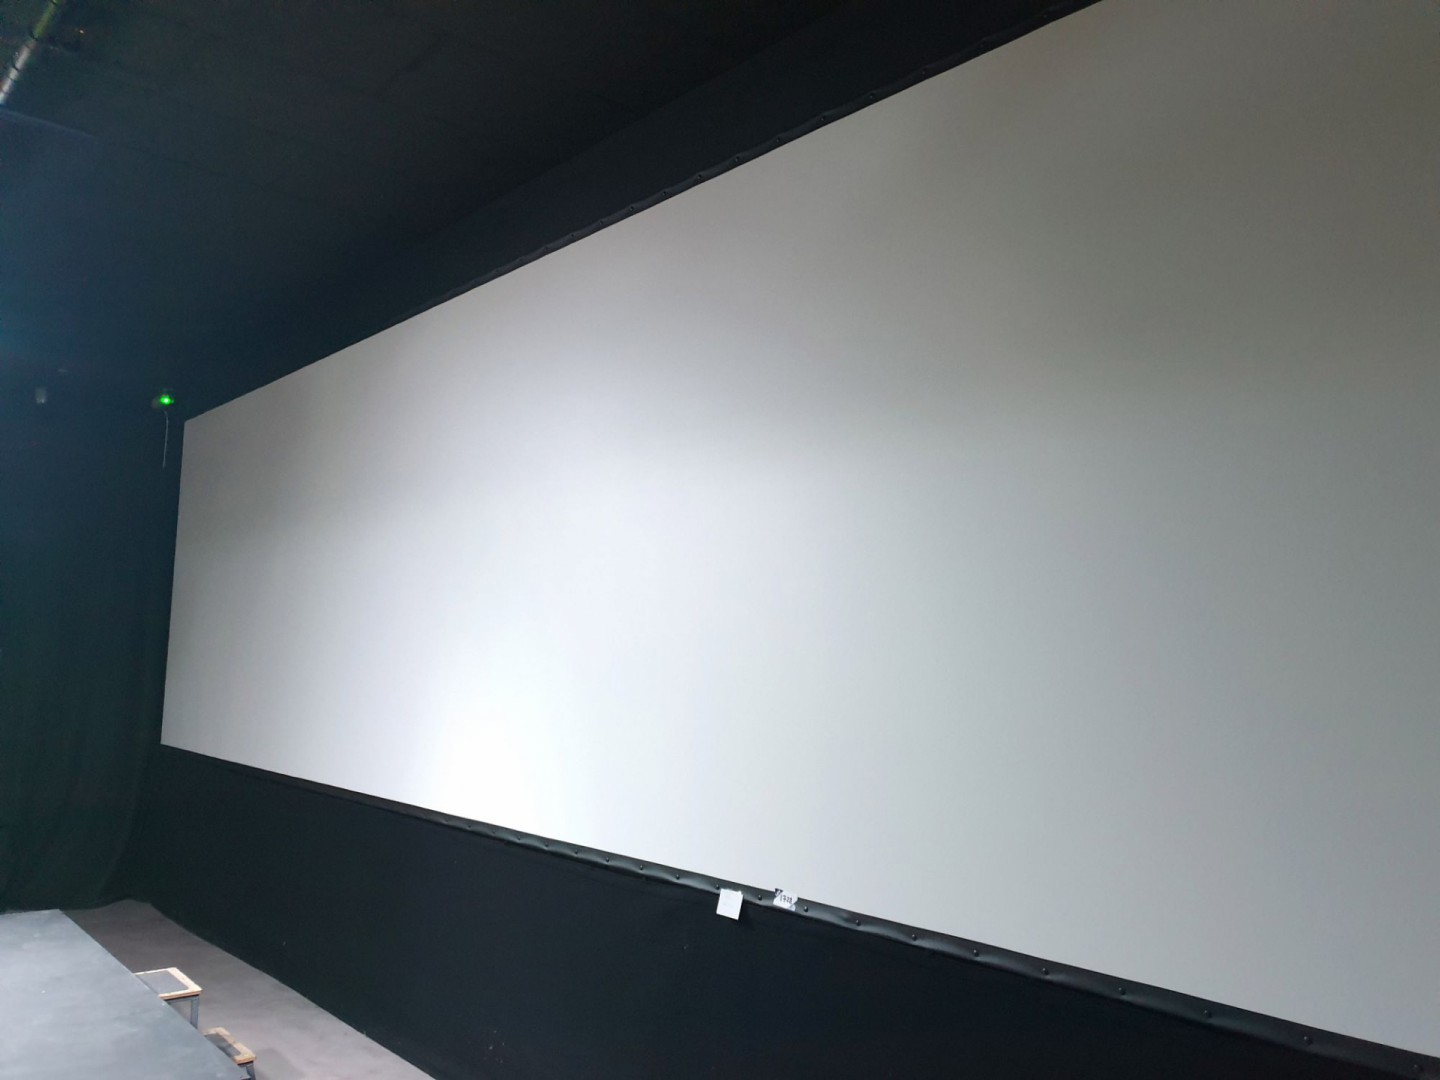 Large projector screen, press studded on aluminium...